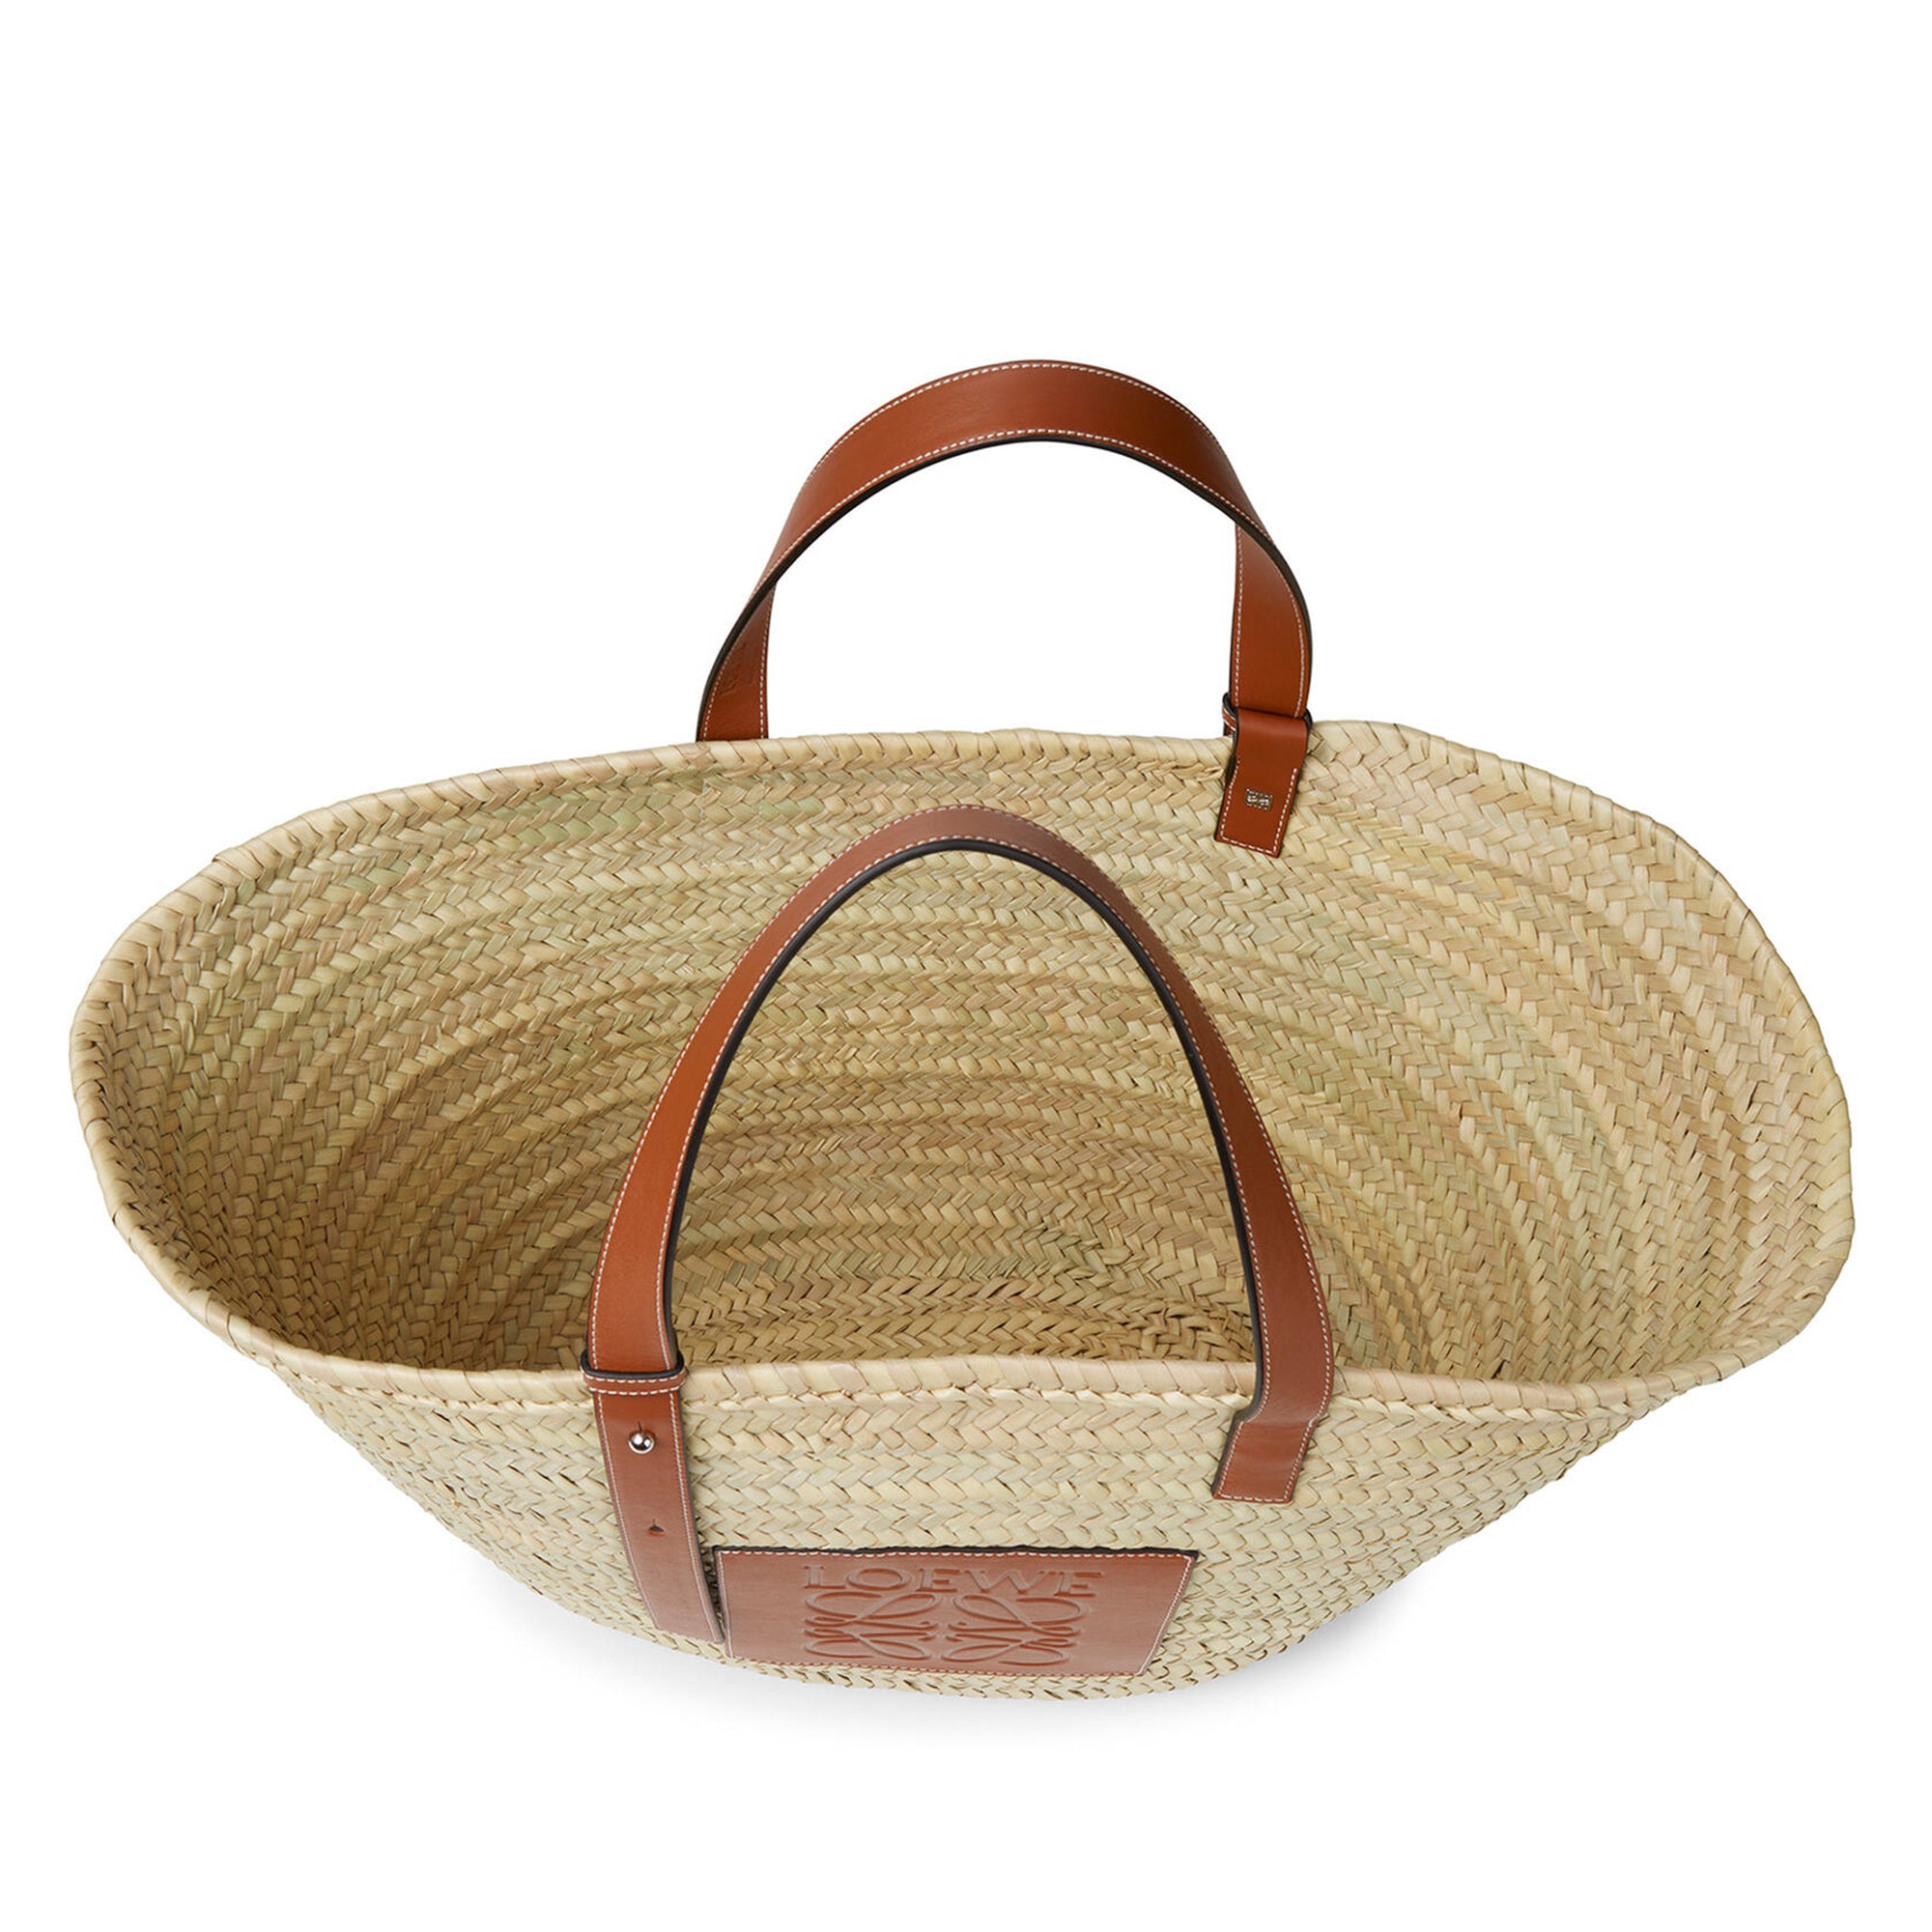 Loewe - Women’s Basket Large Bag - (Natural/Tan) view 3